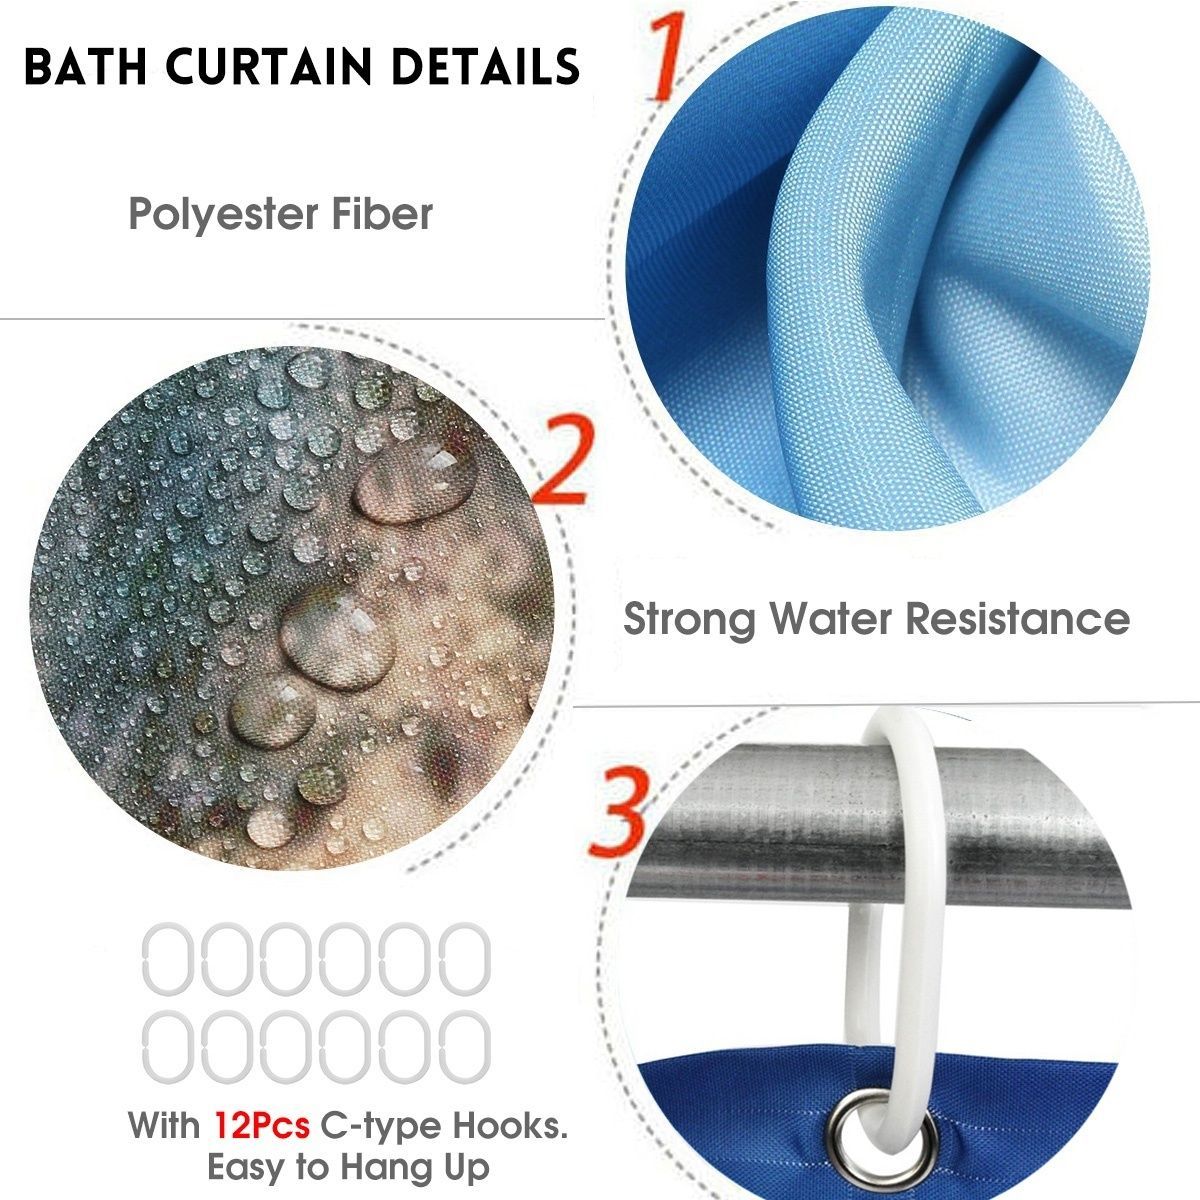 Cat-Printing-Waterproof-Bathroom-Shower-Curtain-Toilet-Cover-Mat-Set-1582216